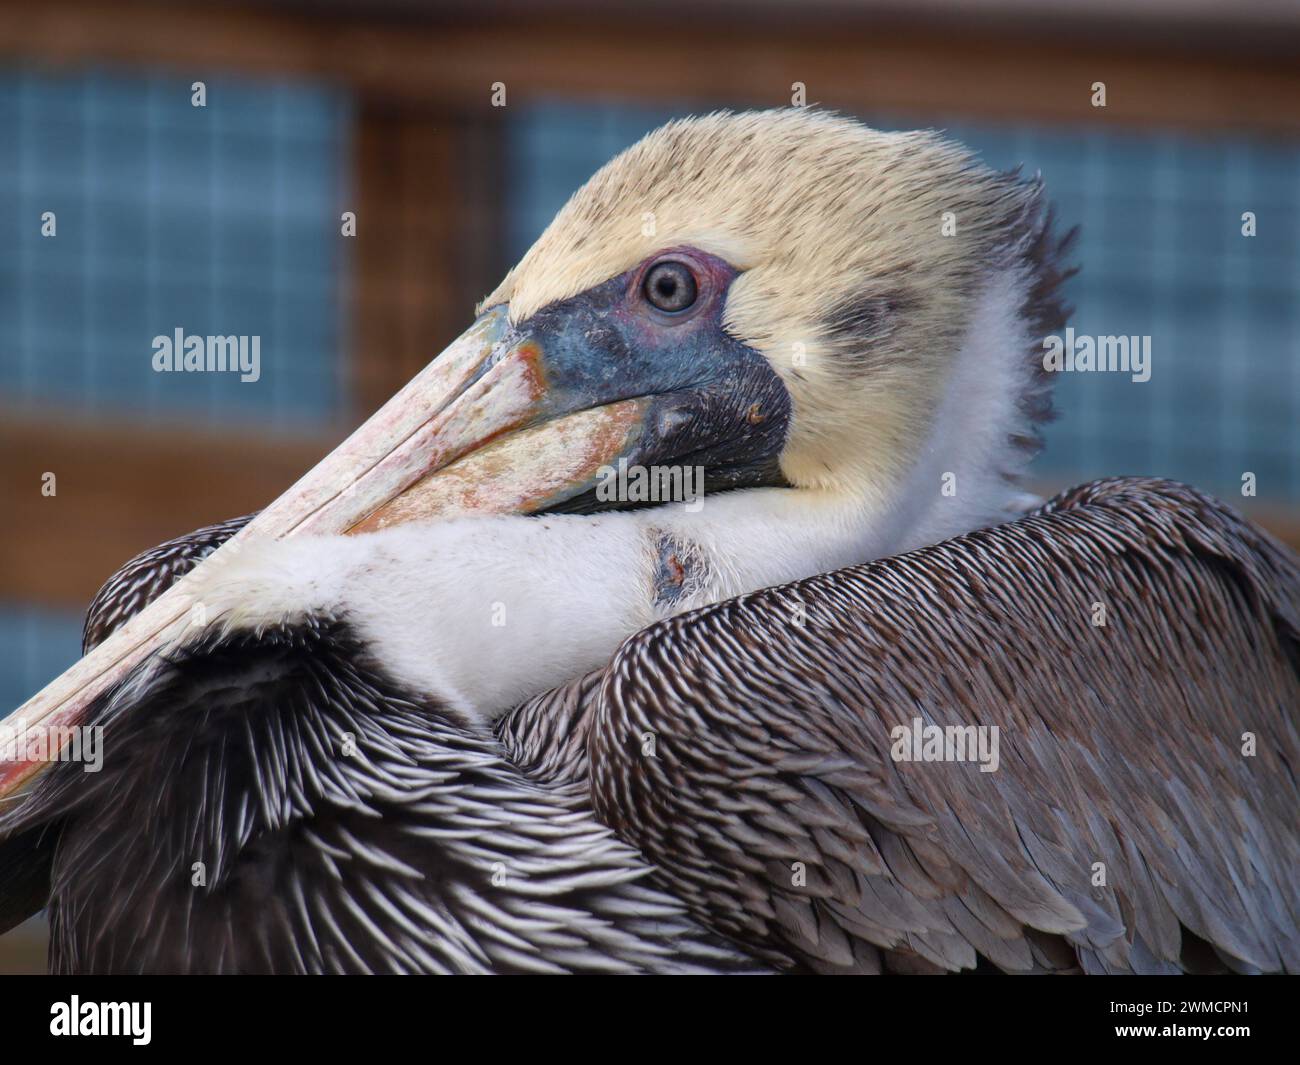 Nahaufnahme des Kopfes eines verwundeten Pelikans. Gute Details des Auges. Stockfoto